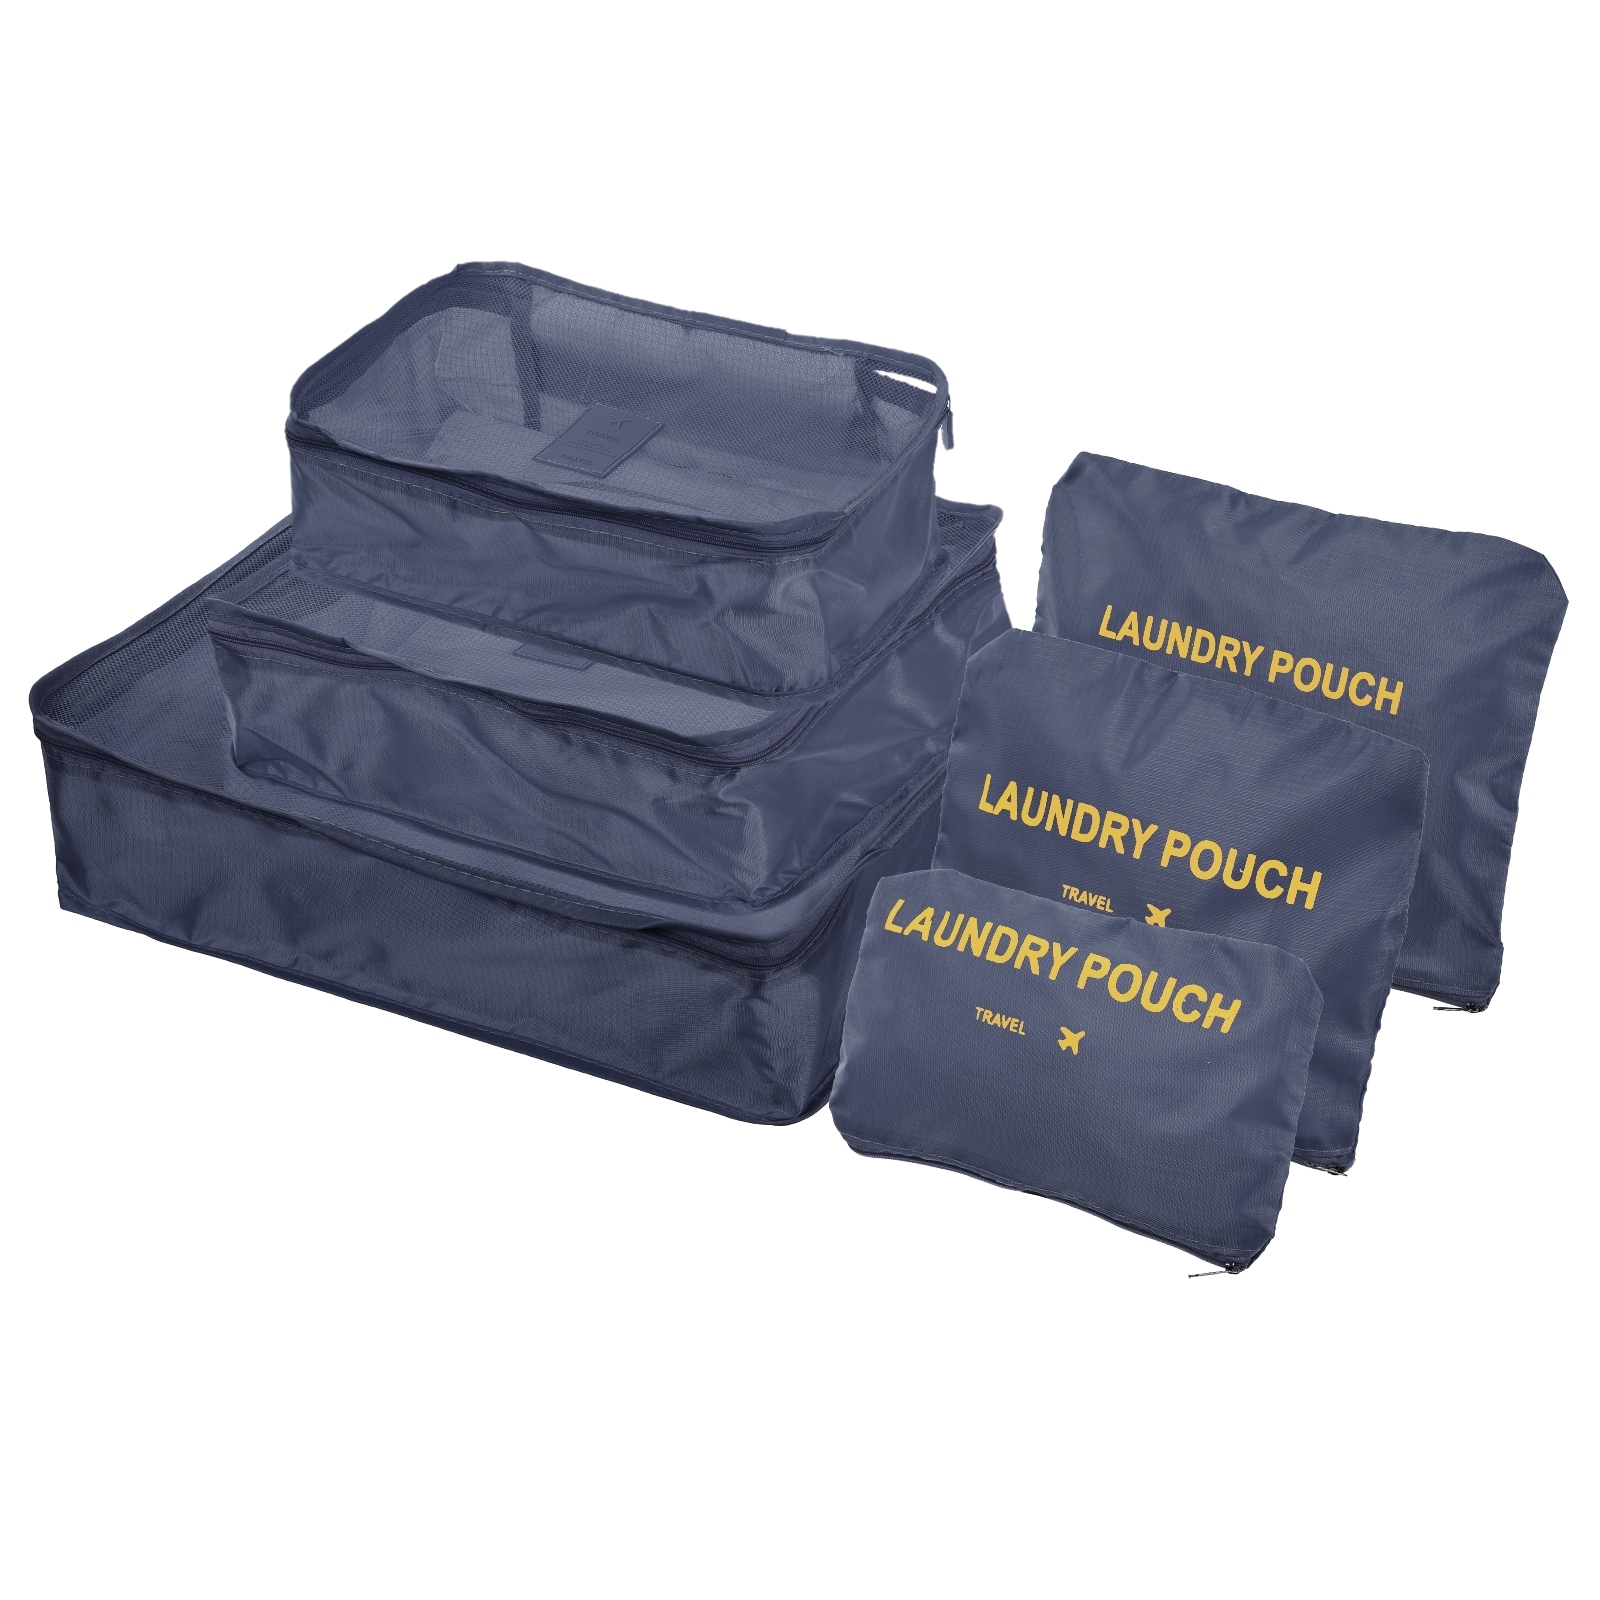 6pcs blue travel storage bag Clothes Storage Bags Portable Luggage  Organizer For Home Closet Divider Drawer Organiser Travel Clothes Classify  Bag